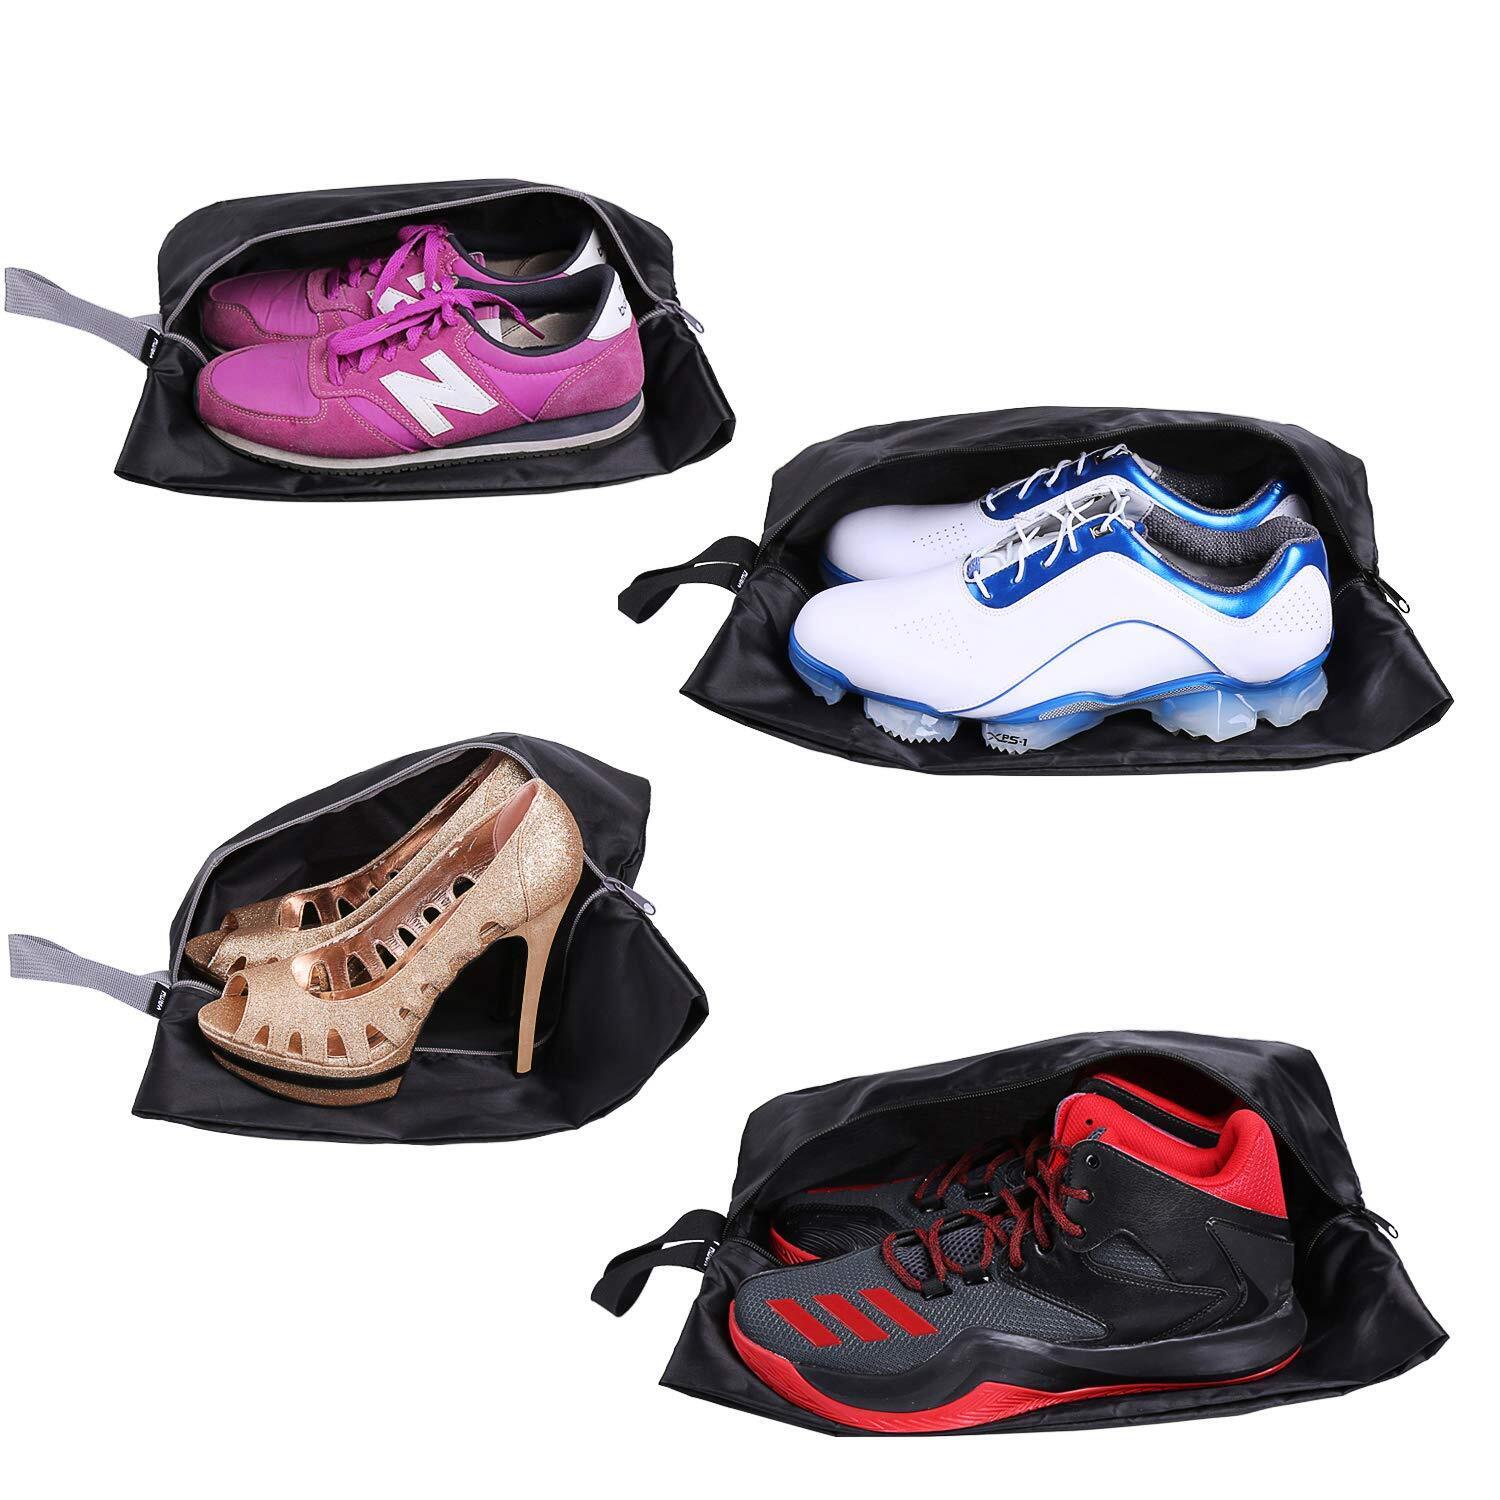 Astonishing Set of 4 Waterproof Nylon Travel Shoe Bags, Black, Men & Women, Zippered on eBay